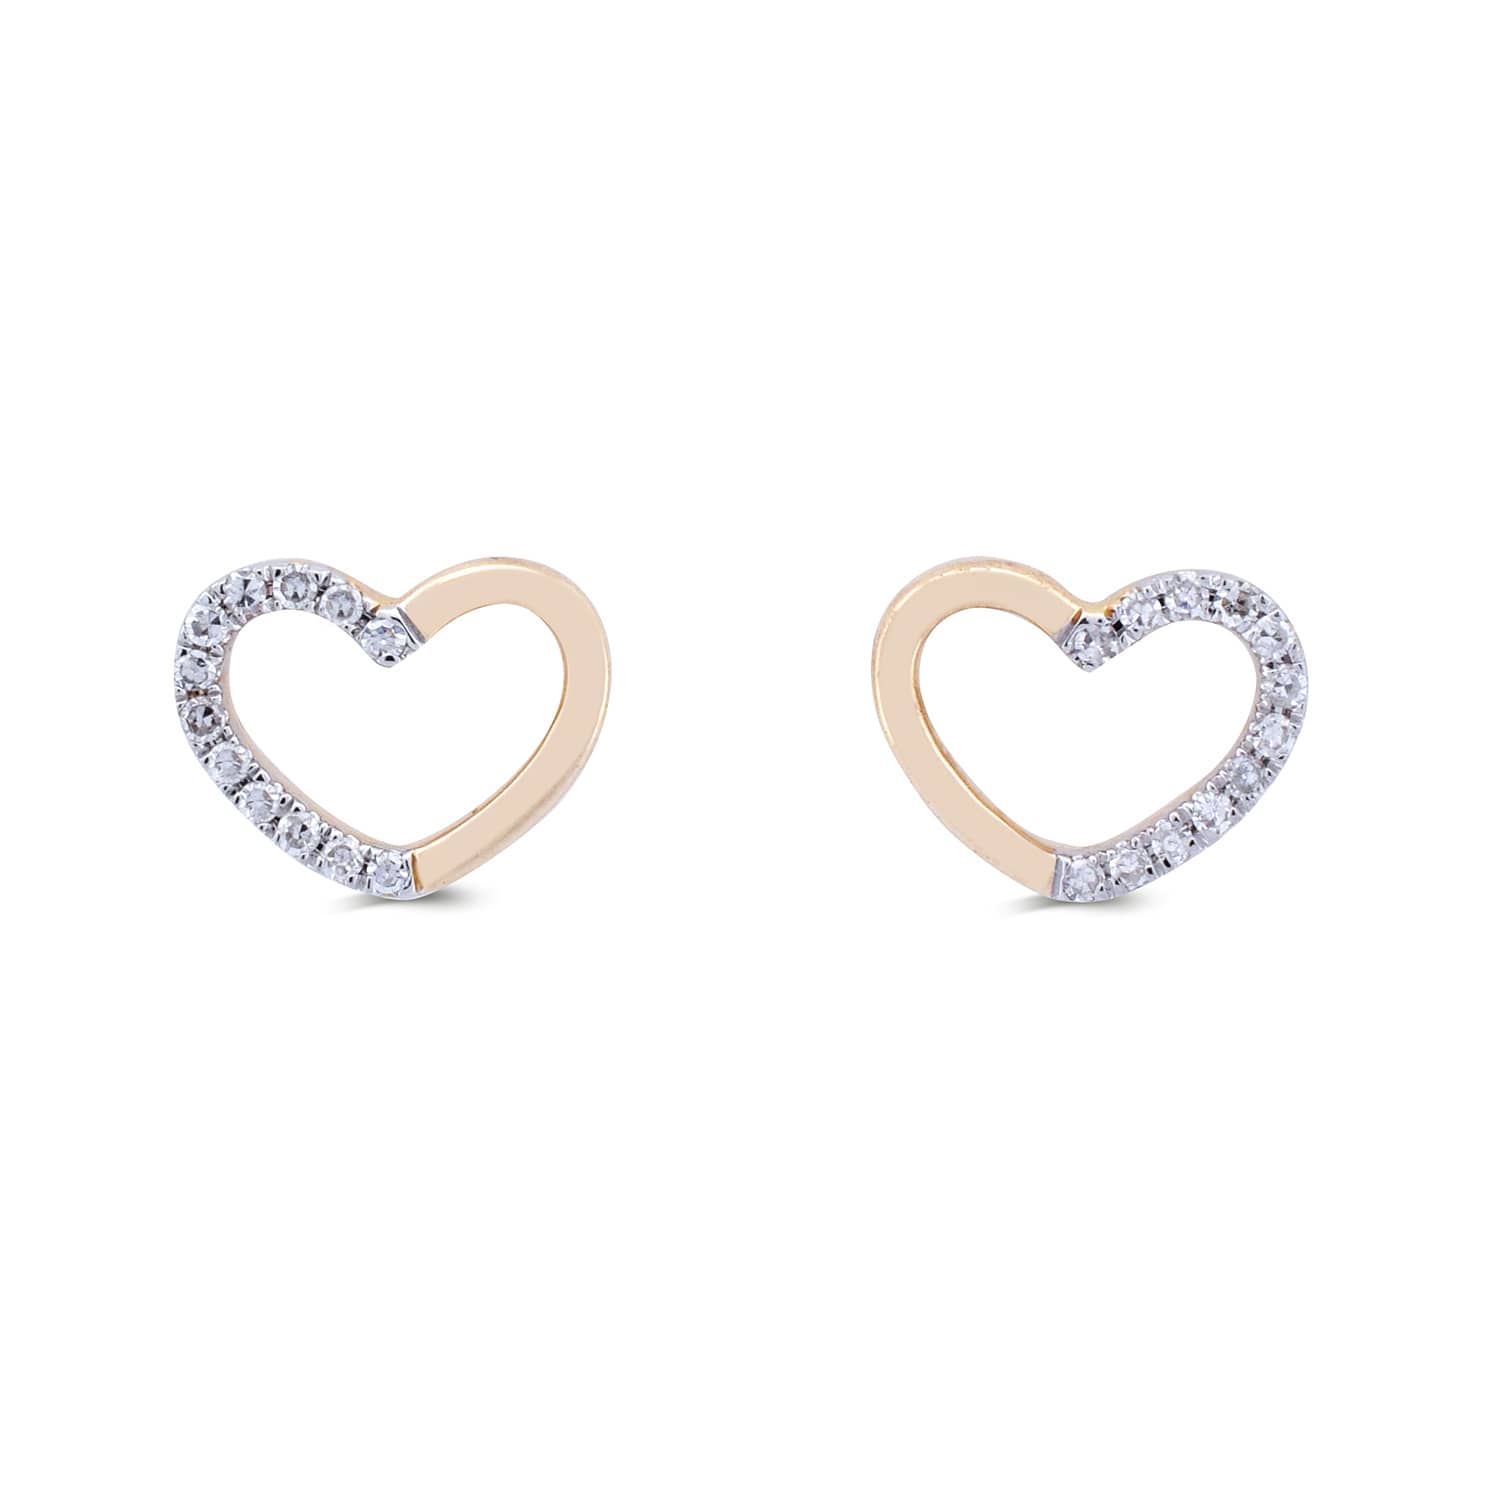 Petite-Heart-Earrings-Half-Diamonds-Half-Polished-Gold by Payroll Jewelry